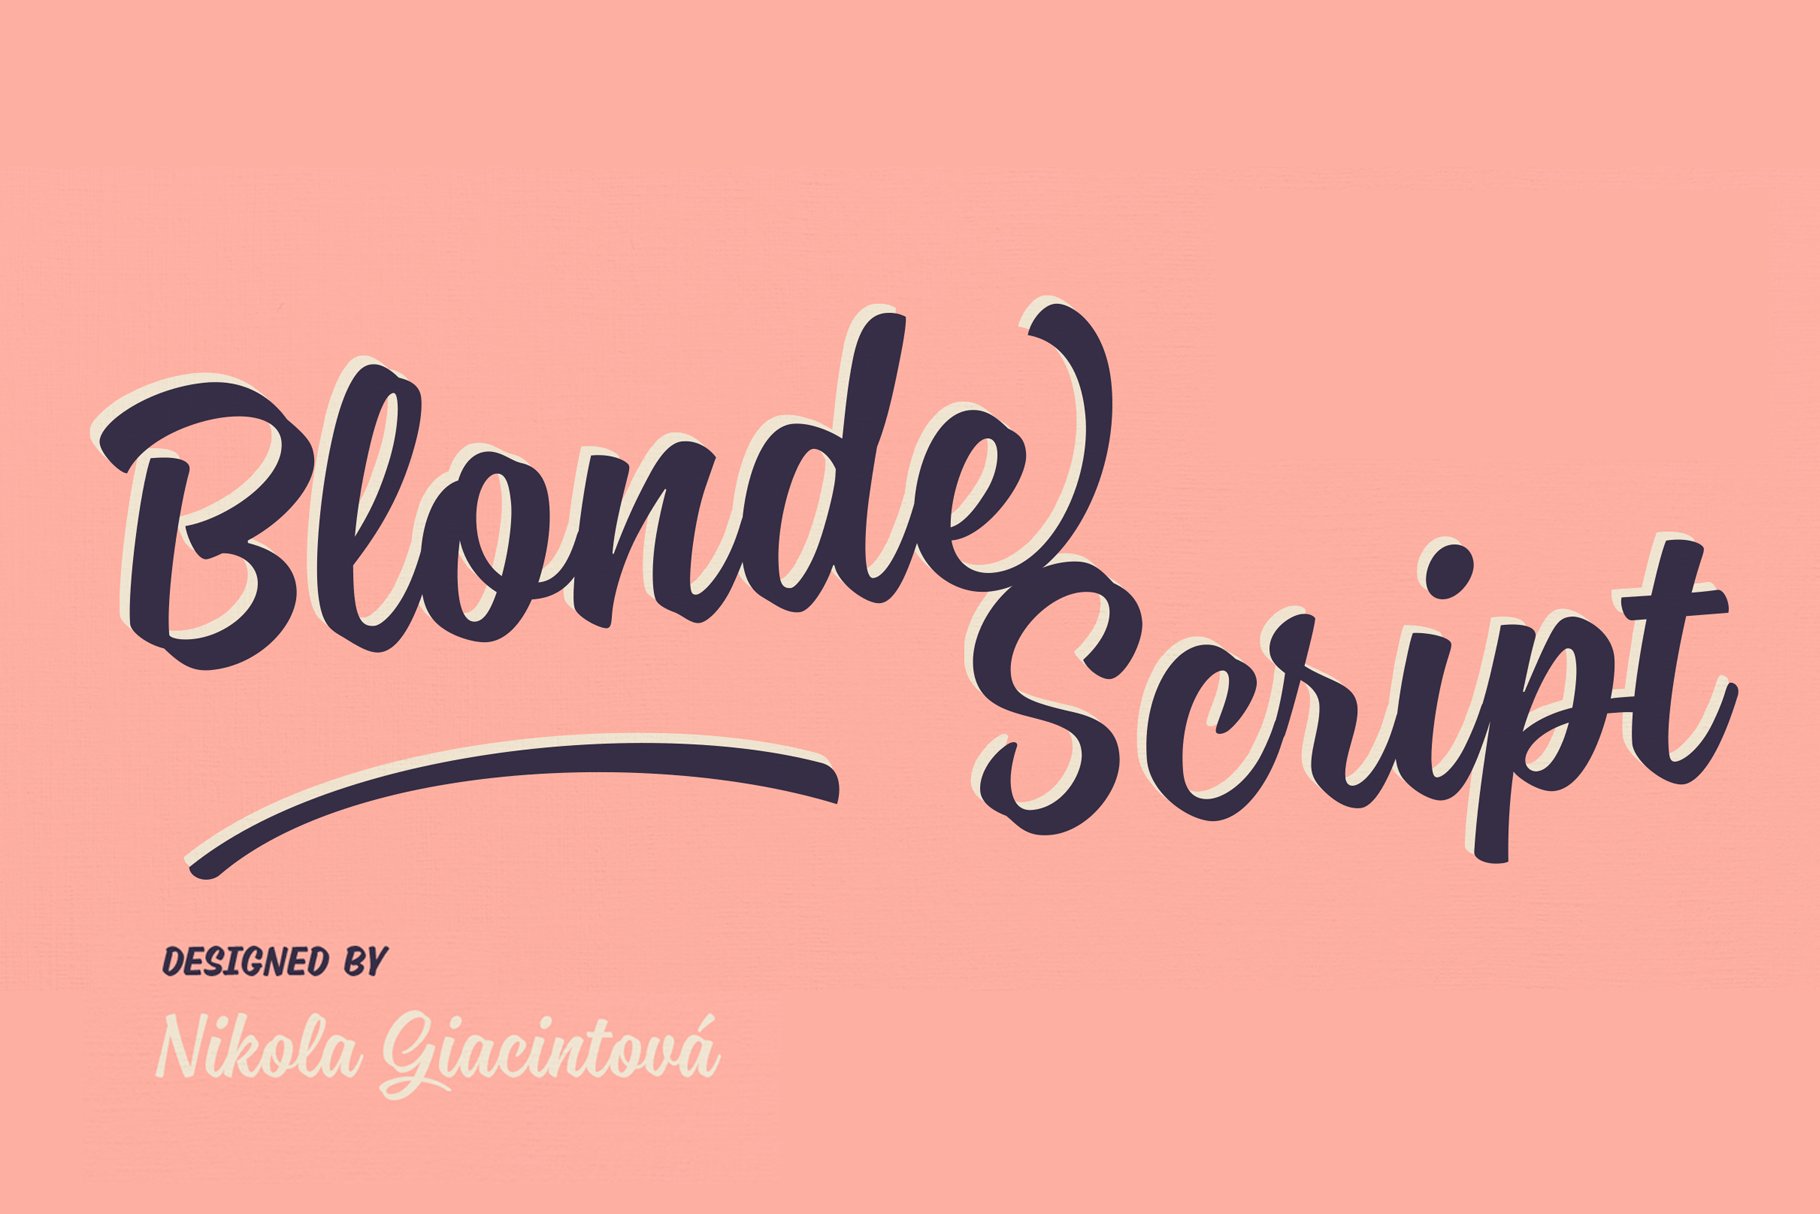 Blonde Script — 50% Off cover image.